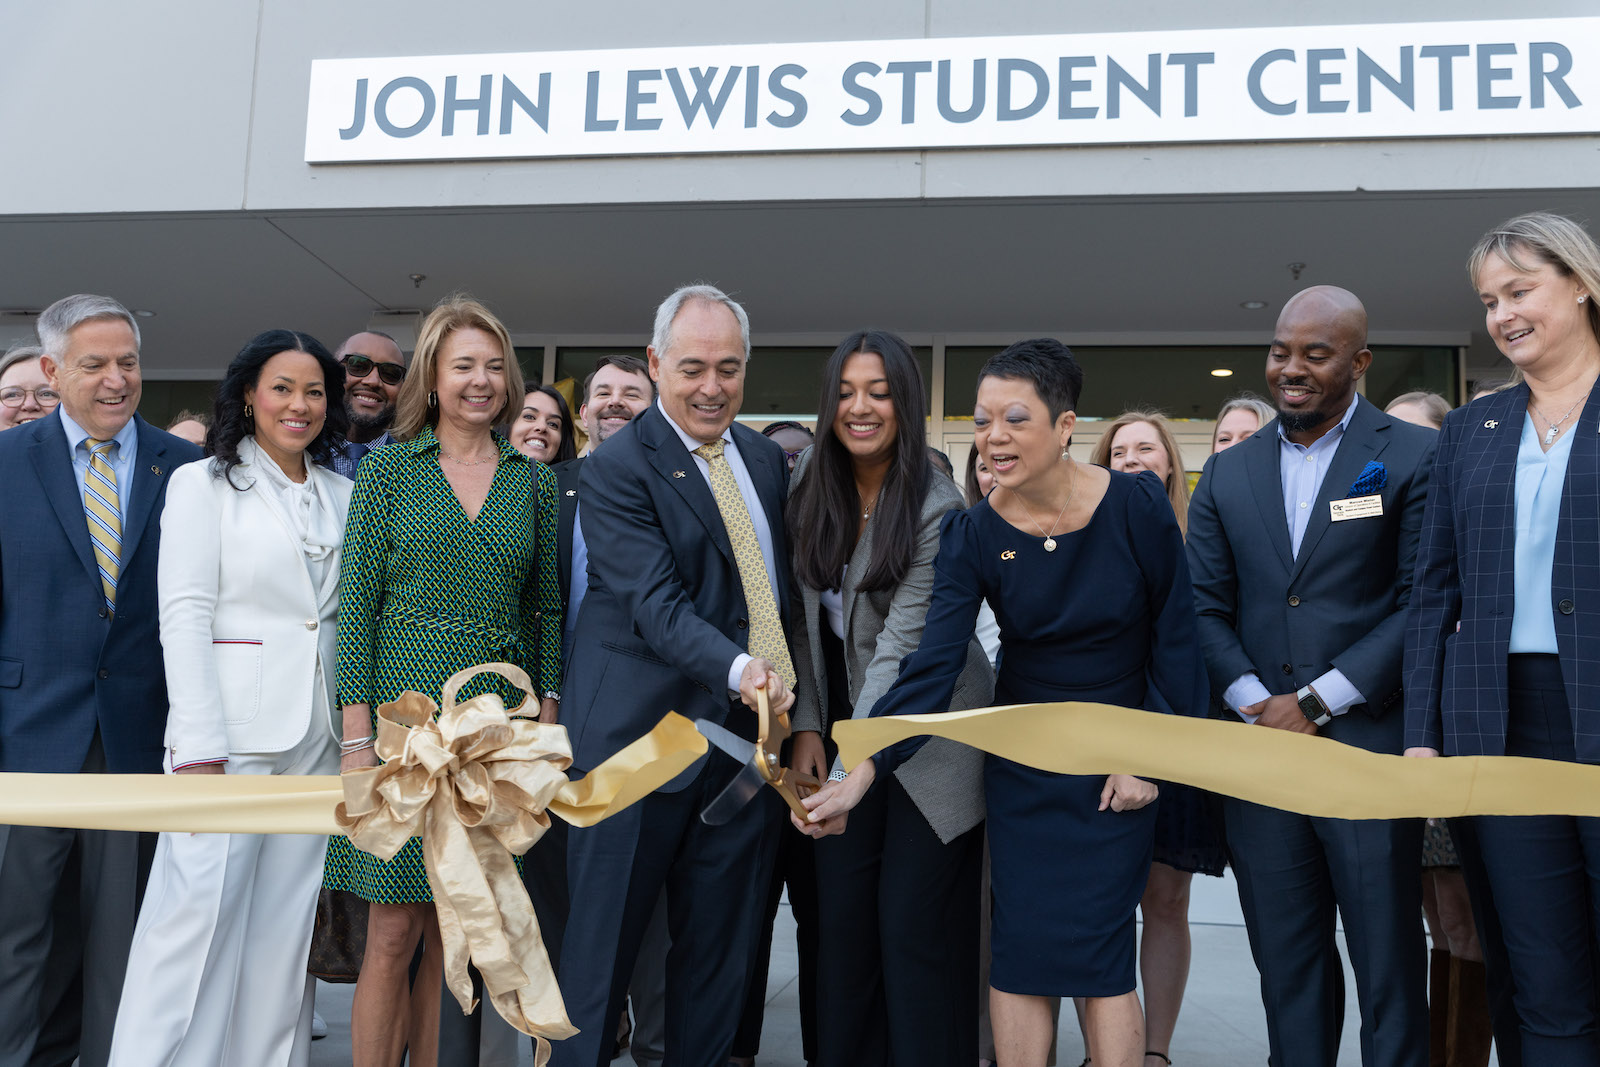 dedication of John Lewis Student Center